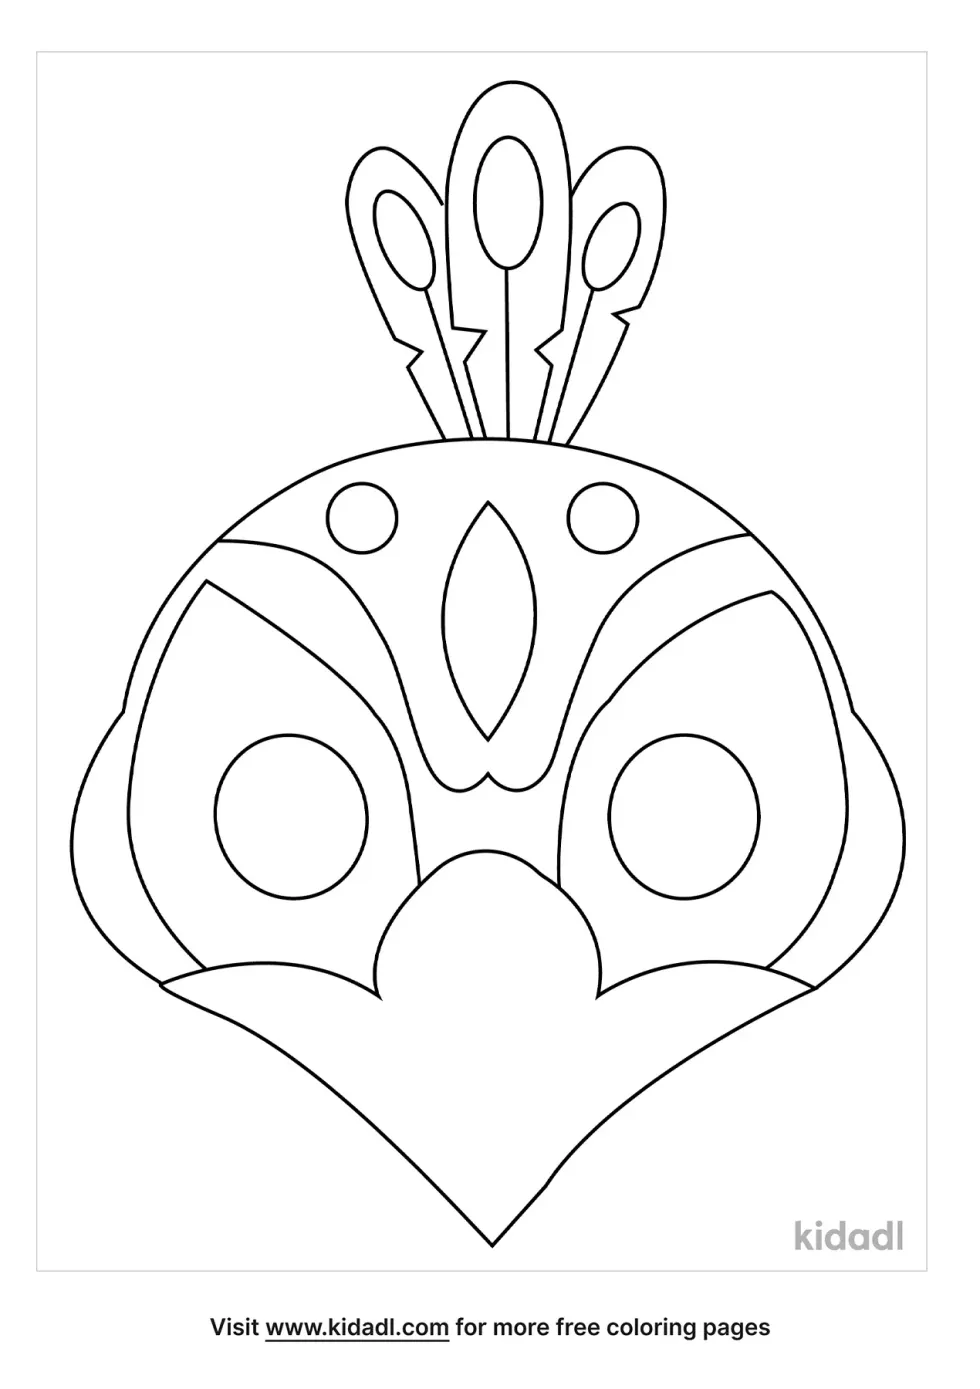 Peacock Mask Template | Kidadl